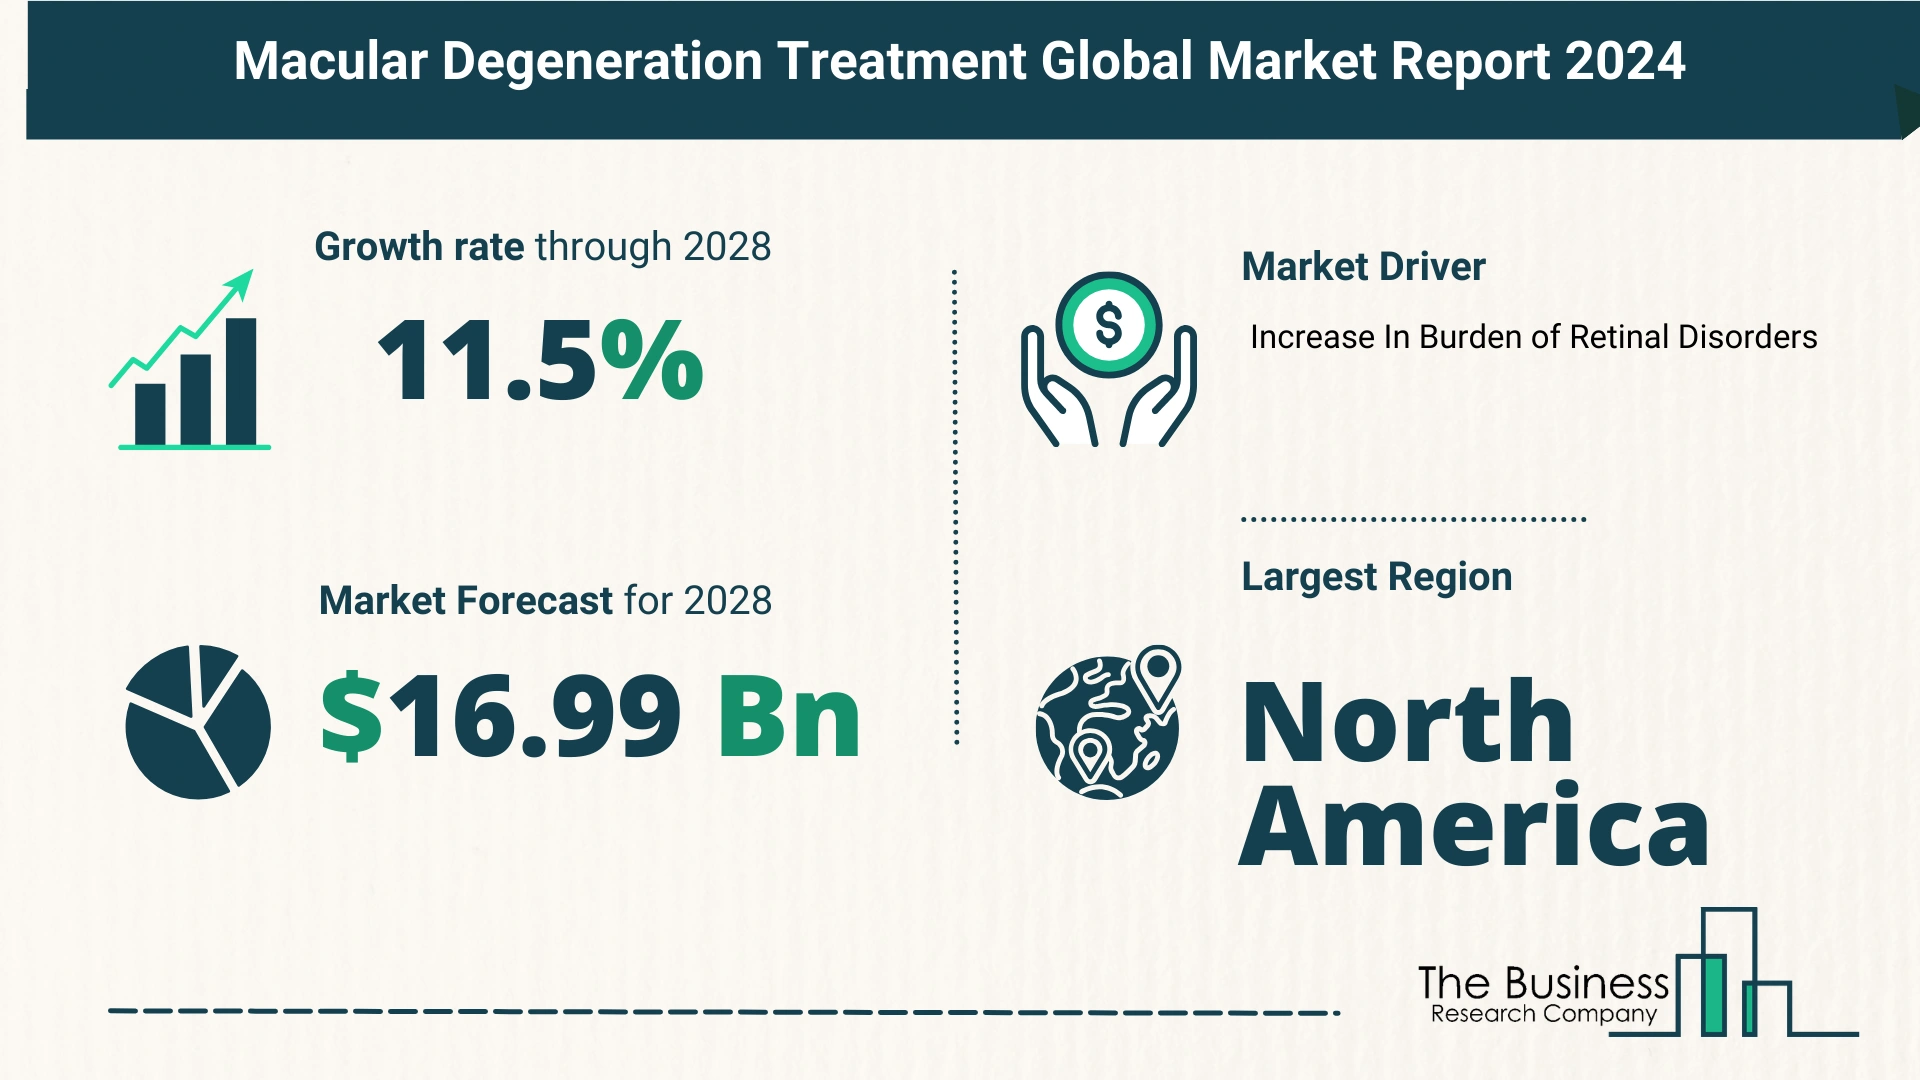 Global Macular Degeneration Treatment Market Size